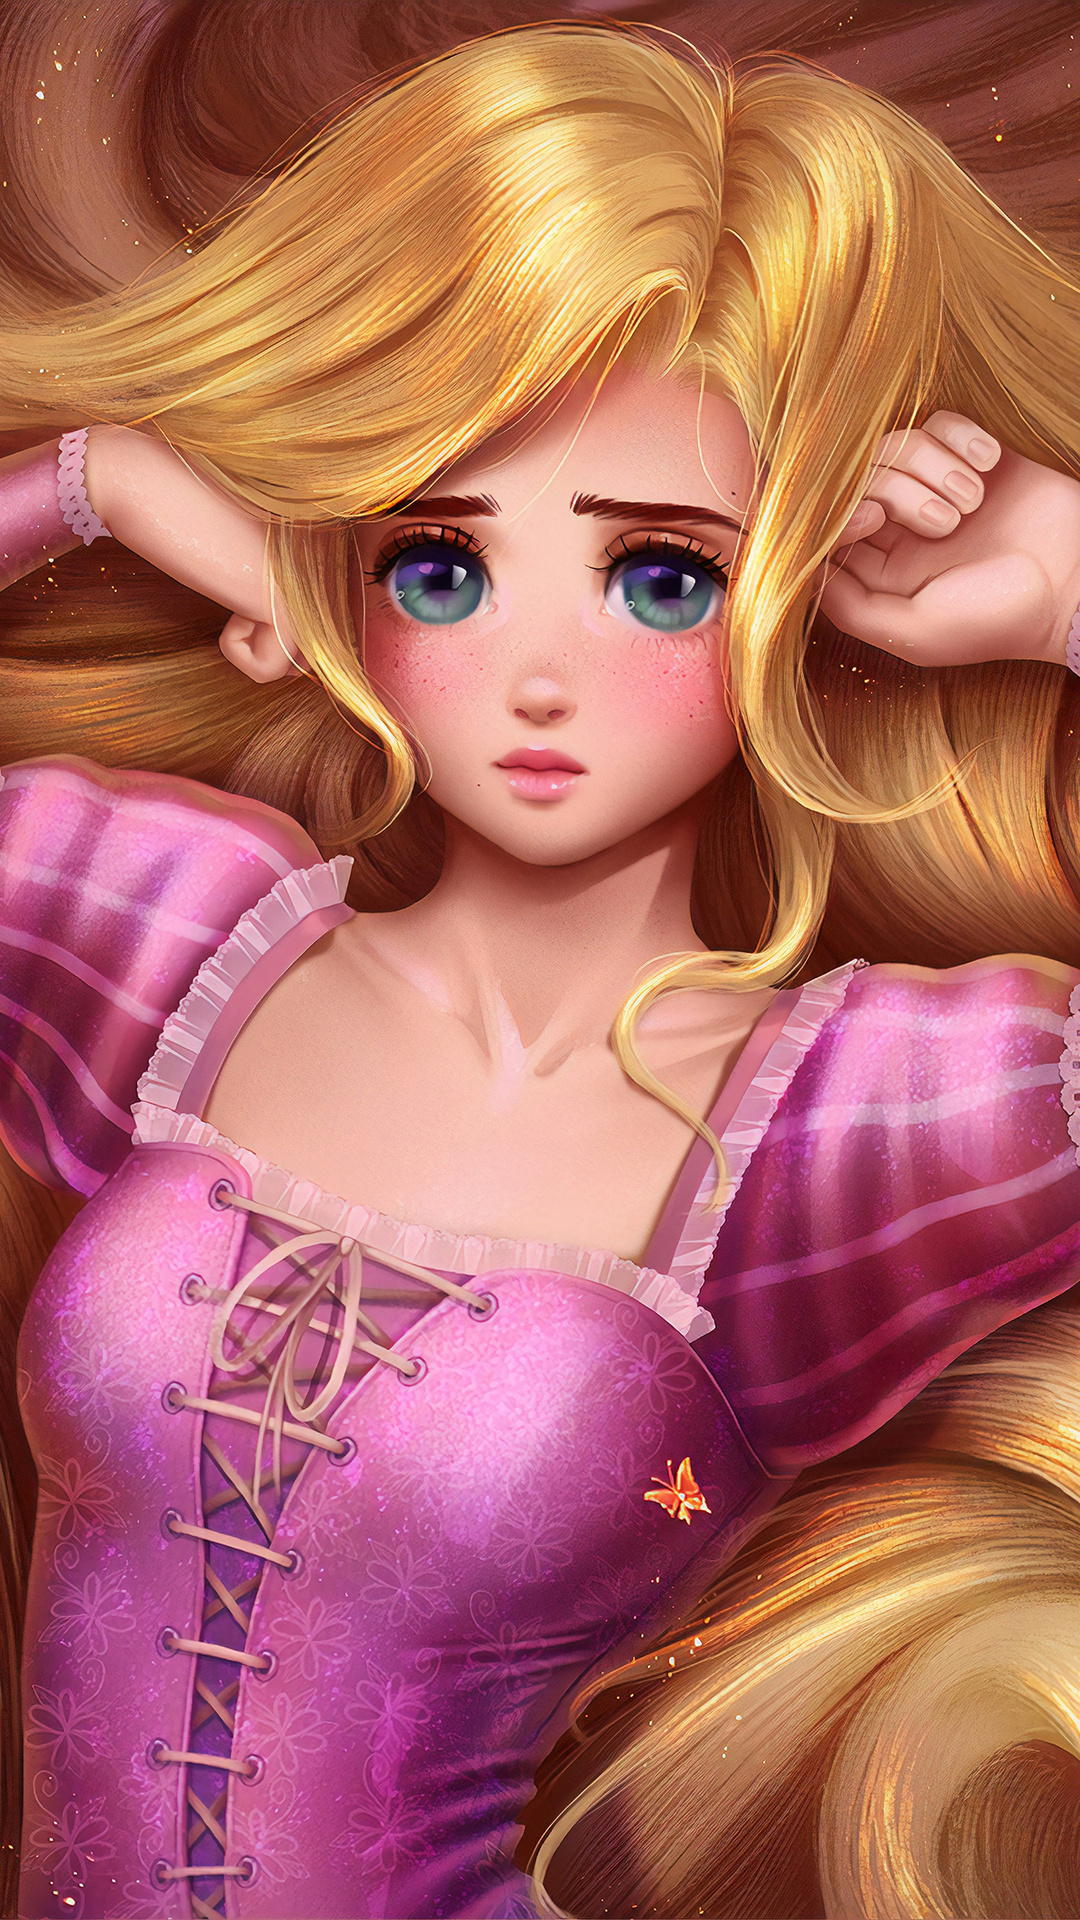 Rapunzel Disney Princess 4k iPhone 6s, 6 Plus, Pixel xl , One Plus 3t, 5 HD 4k Wallpaper, Image, Background, Photo and Picture